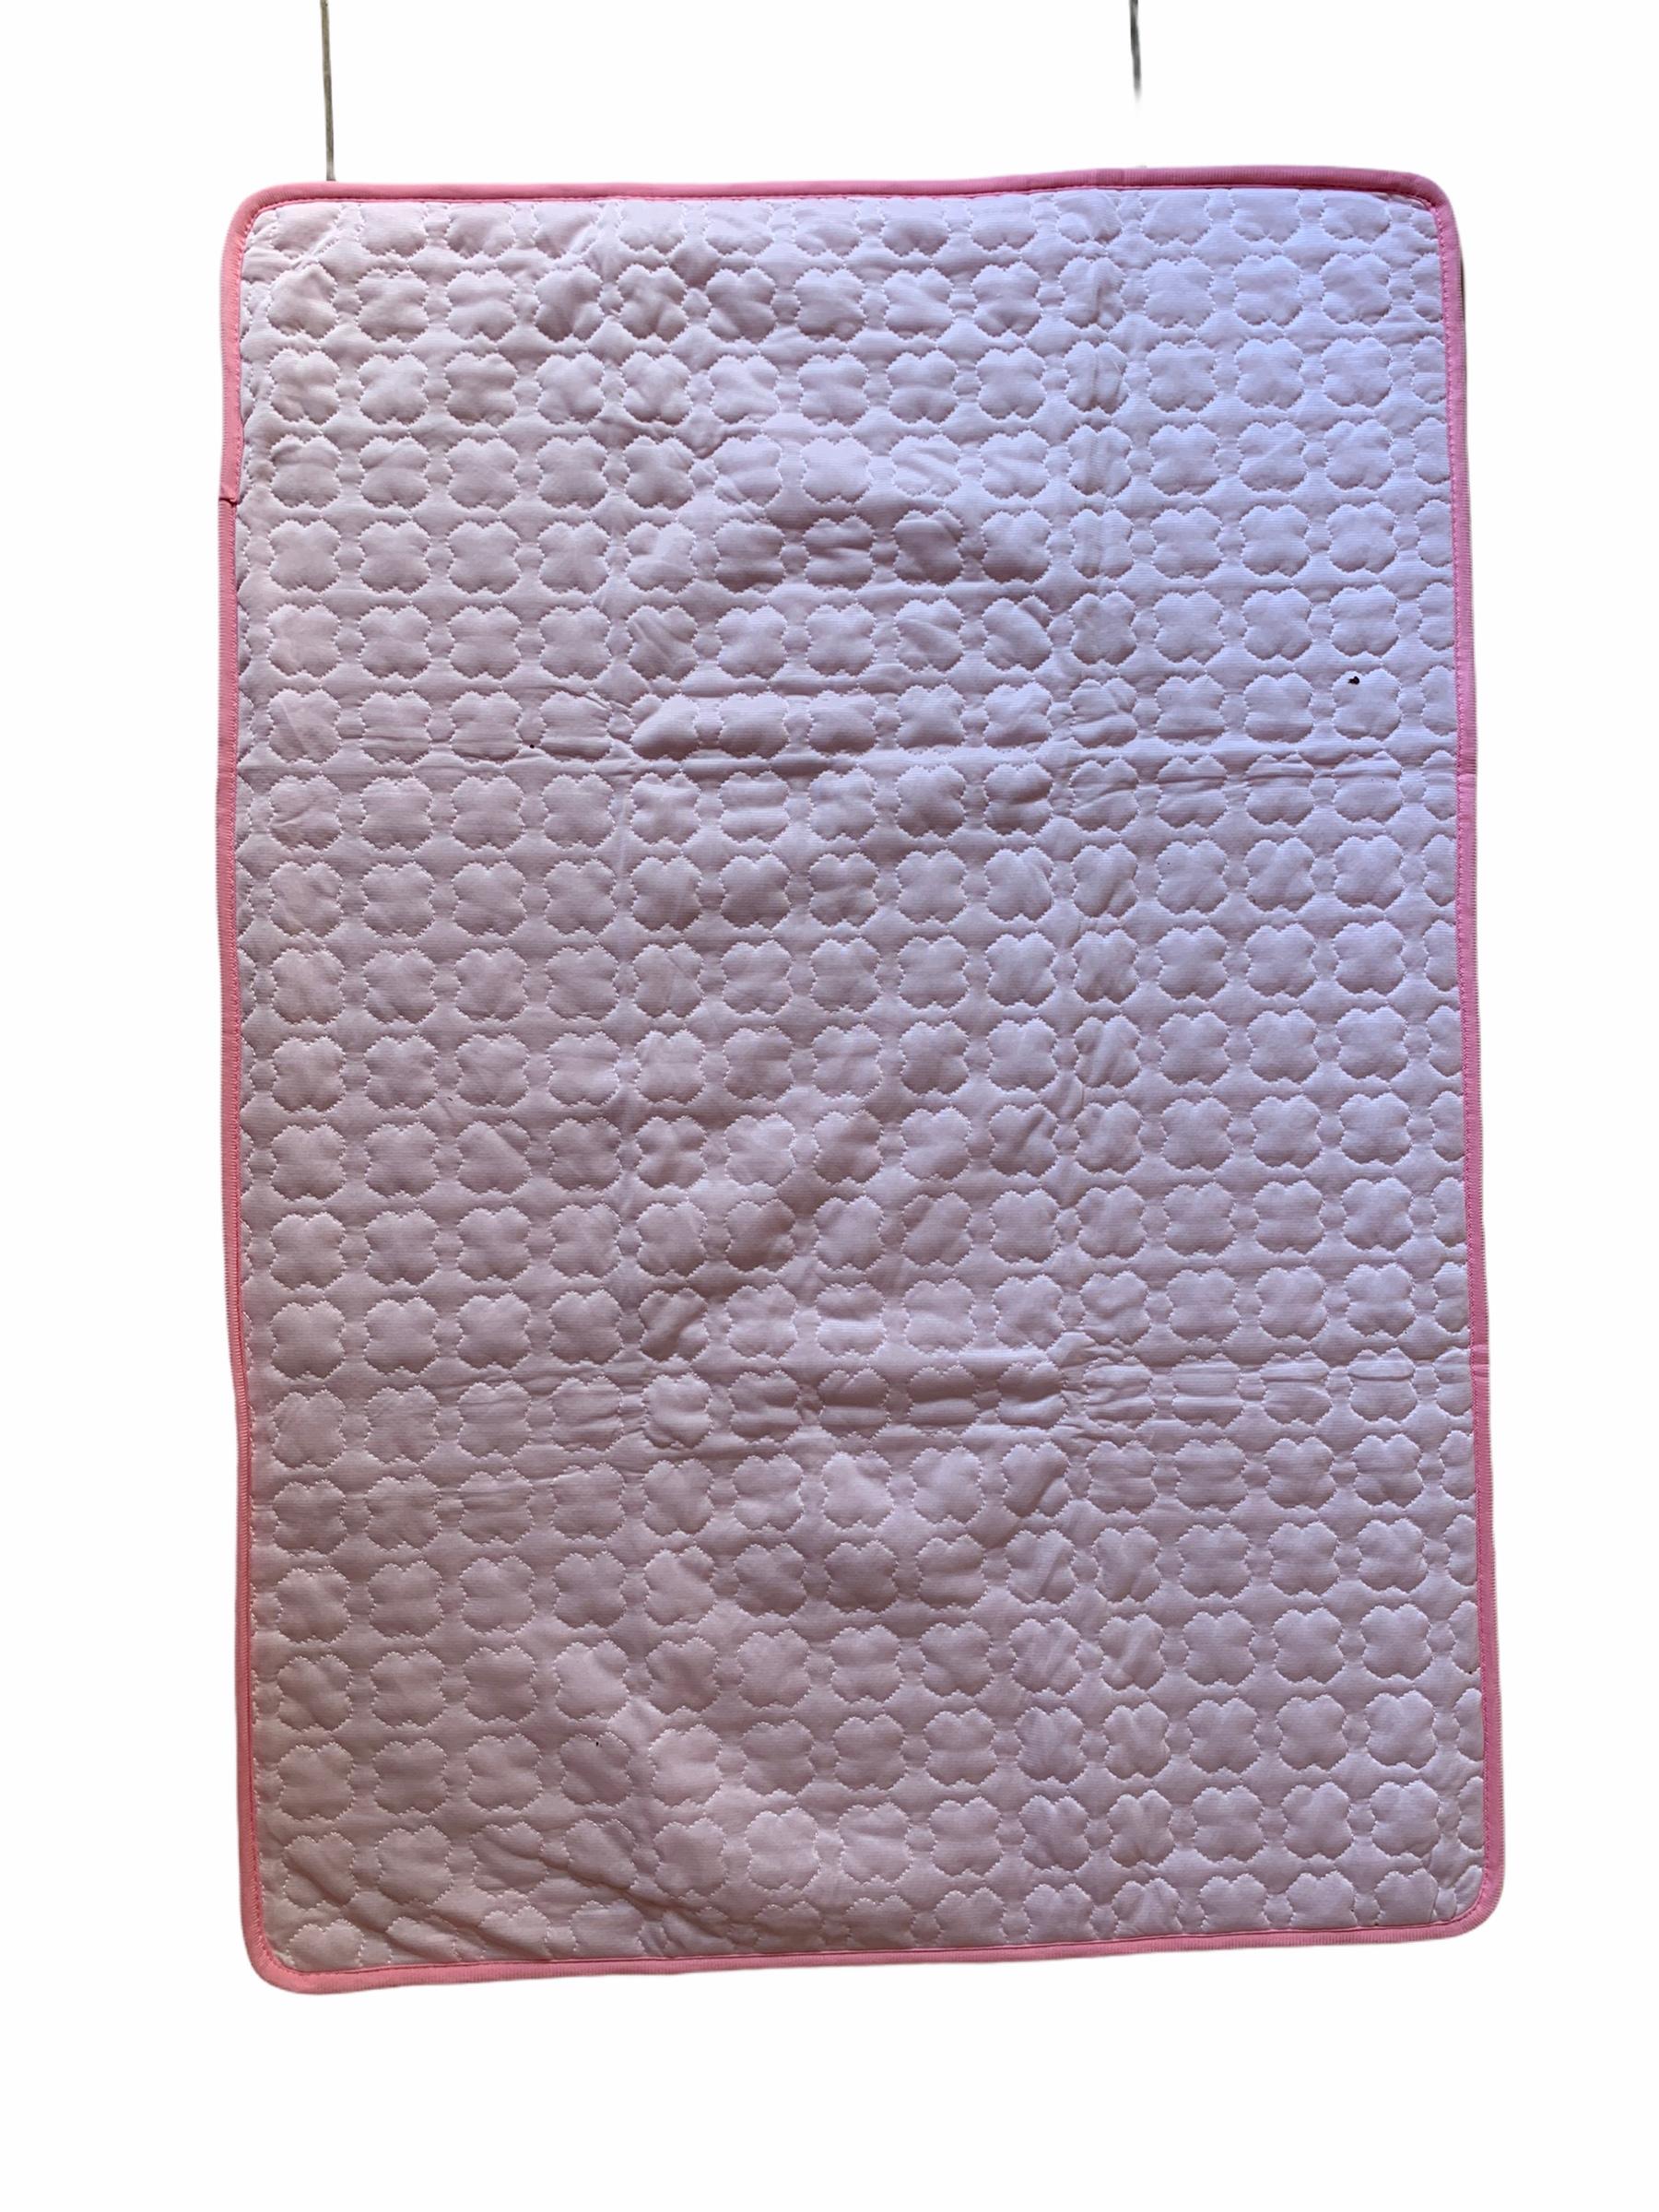 Close up of pink cooling mat material